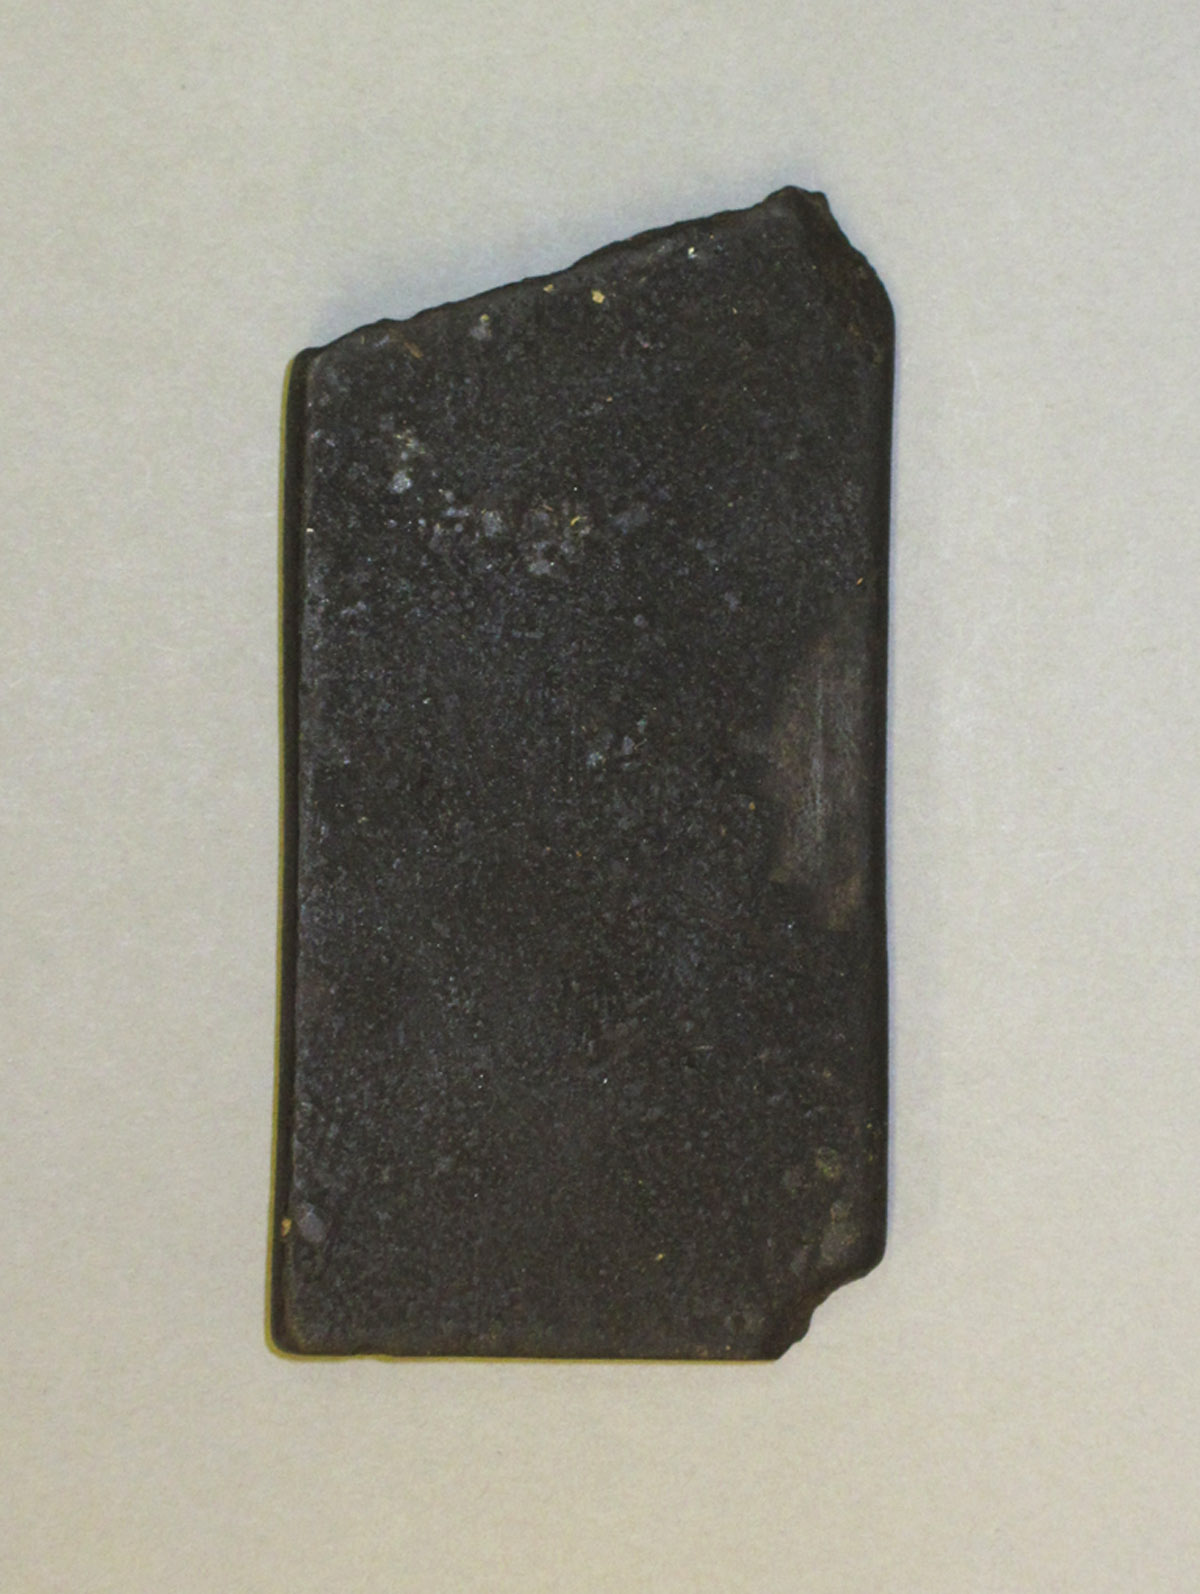 1995.0006.330 Oil stone, Main